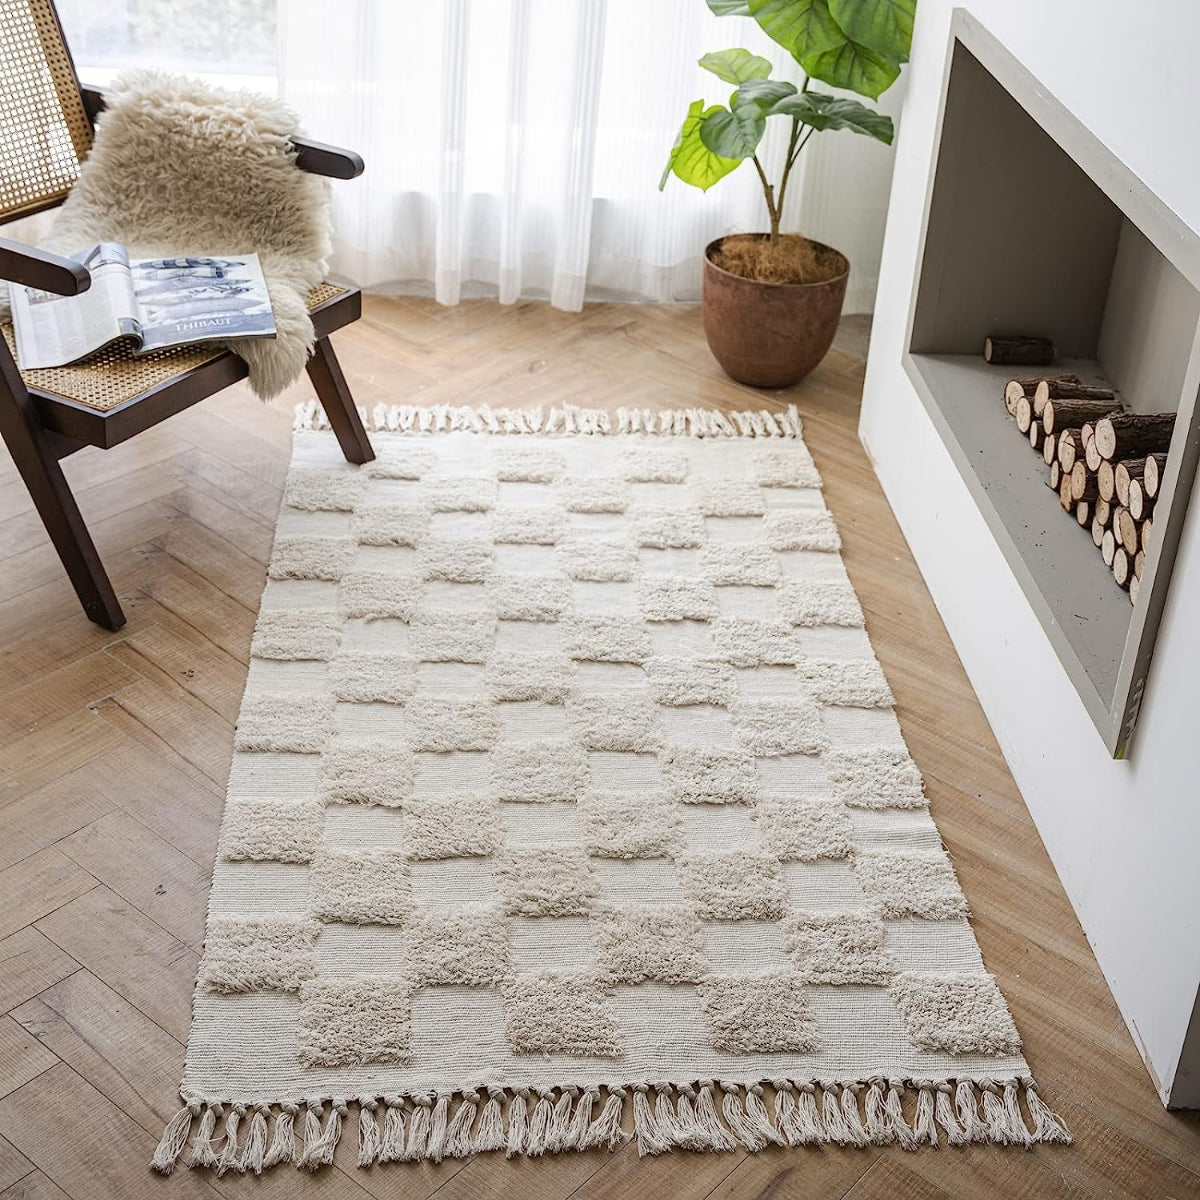 Small 3 X 5 Area Rug, Woven Tufted Boho Door Mat Indoor Entrance Carpet